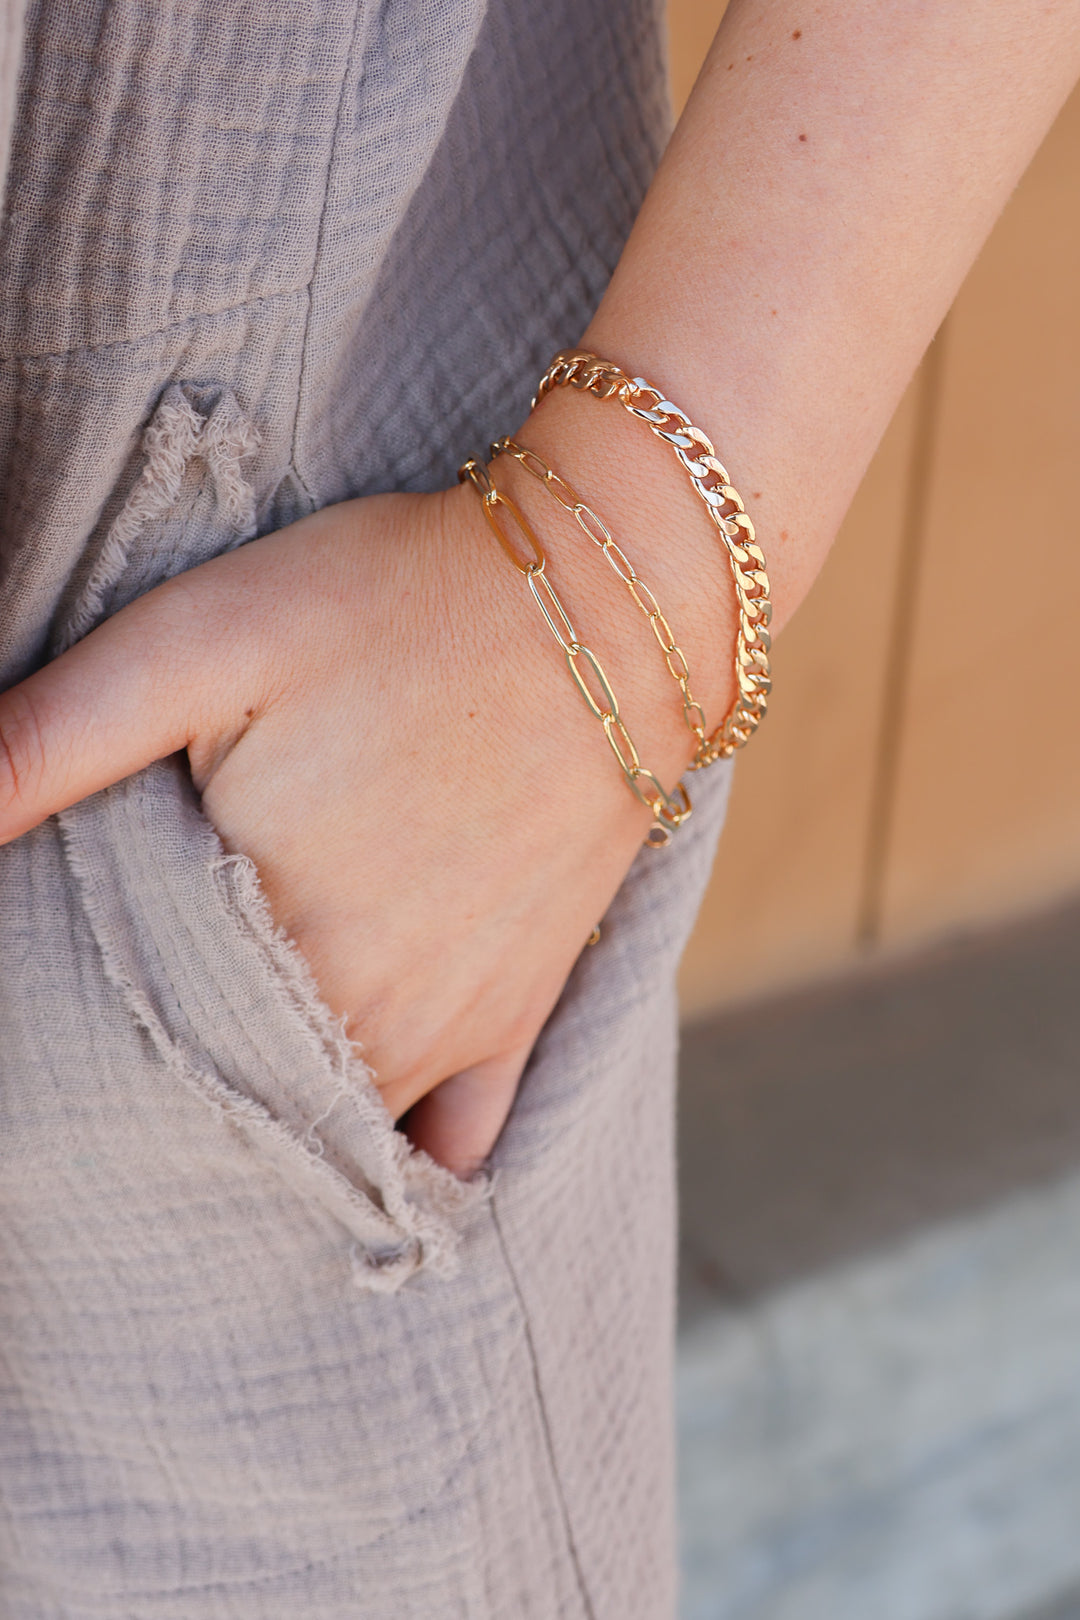 Find a Way Bracelet Set in Gold - ShopSpoiled